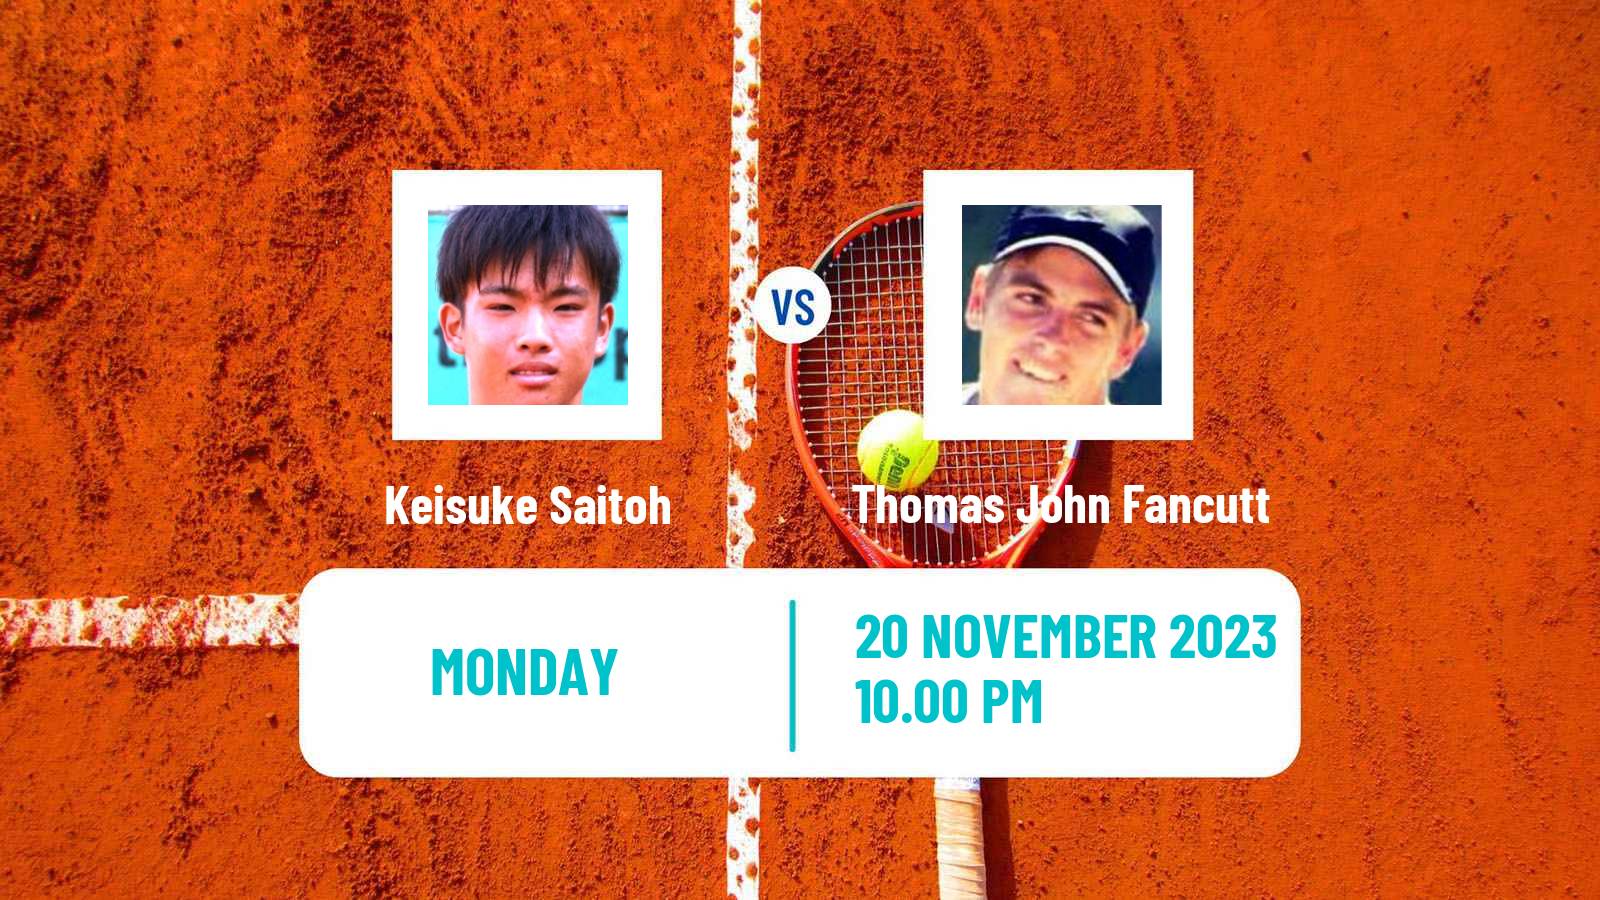 Tennis ITF M25 Brisbane Men 2023 Keisuke Saitoh - Thomas John Fancutt